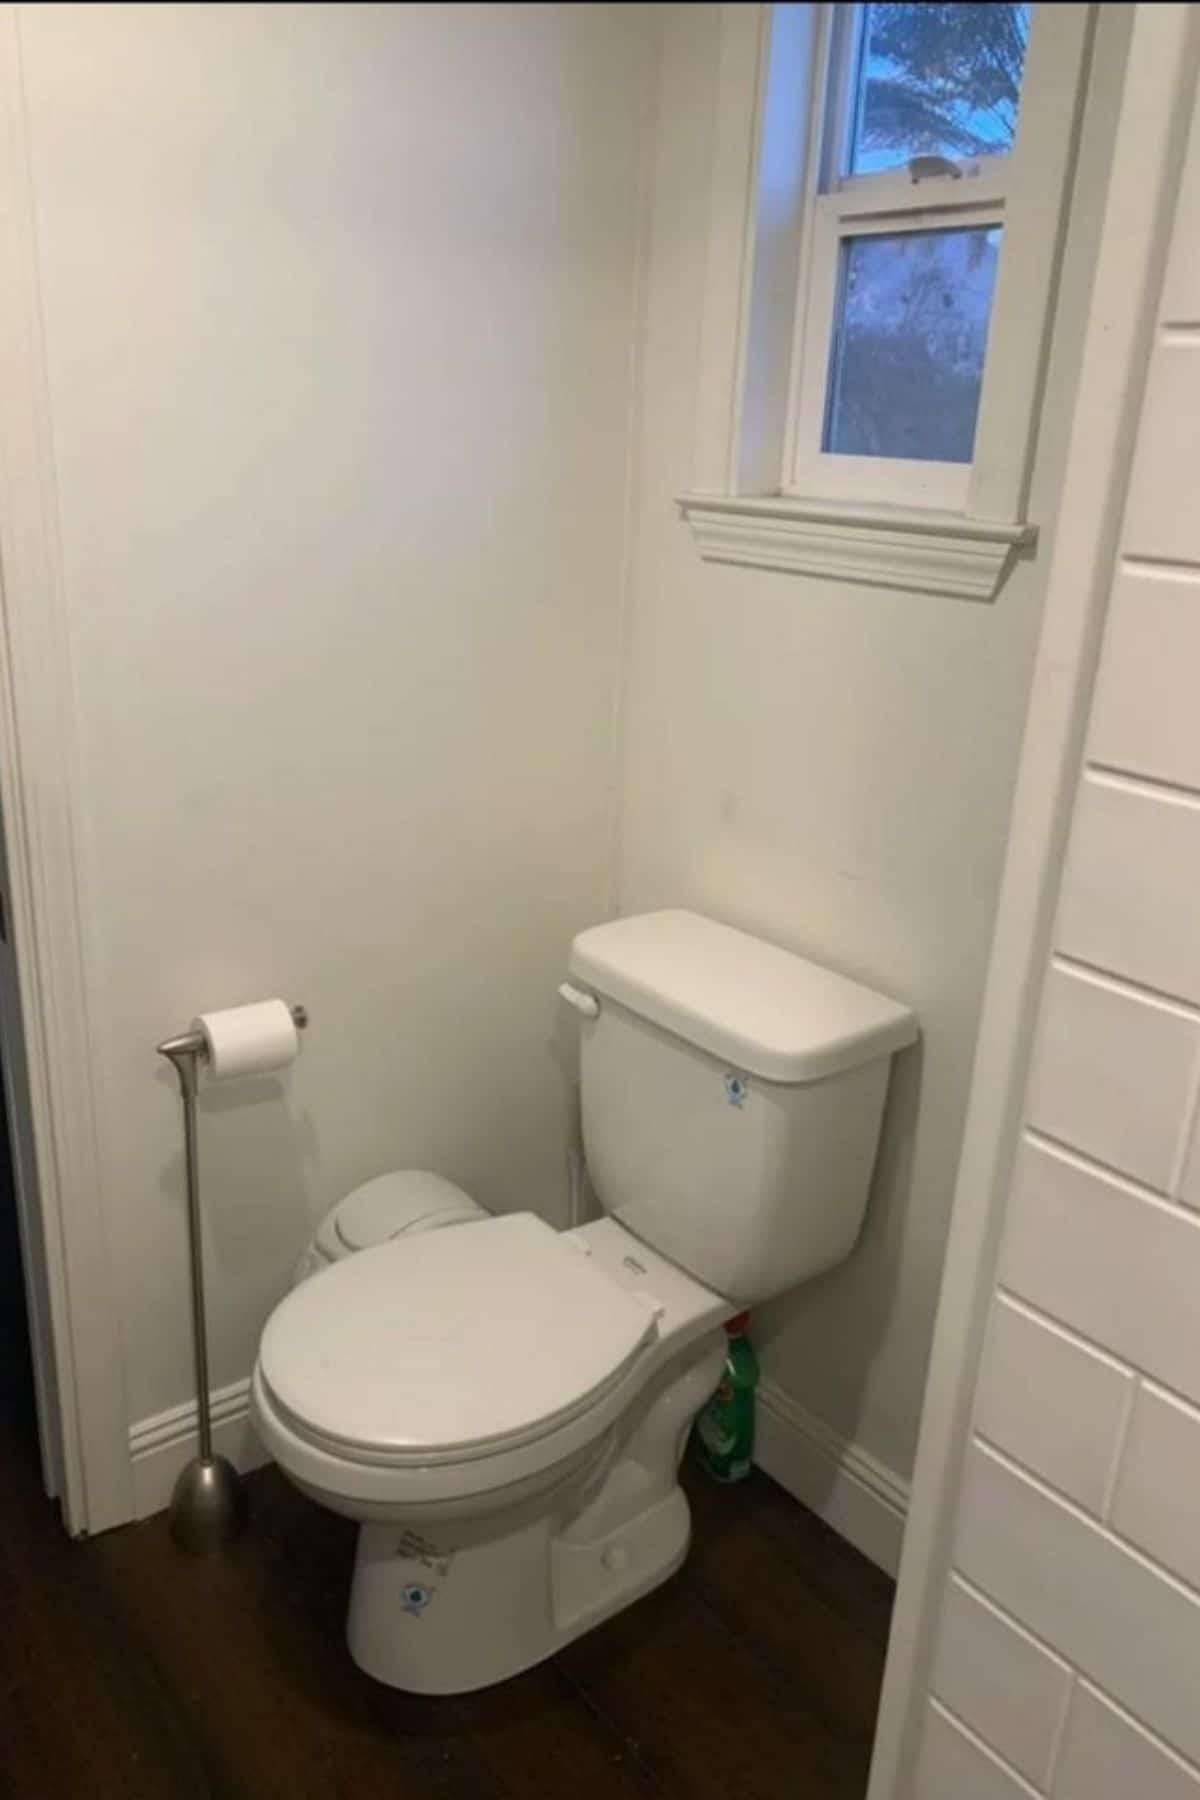 white flush toilet against white wall in bathroom below window